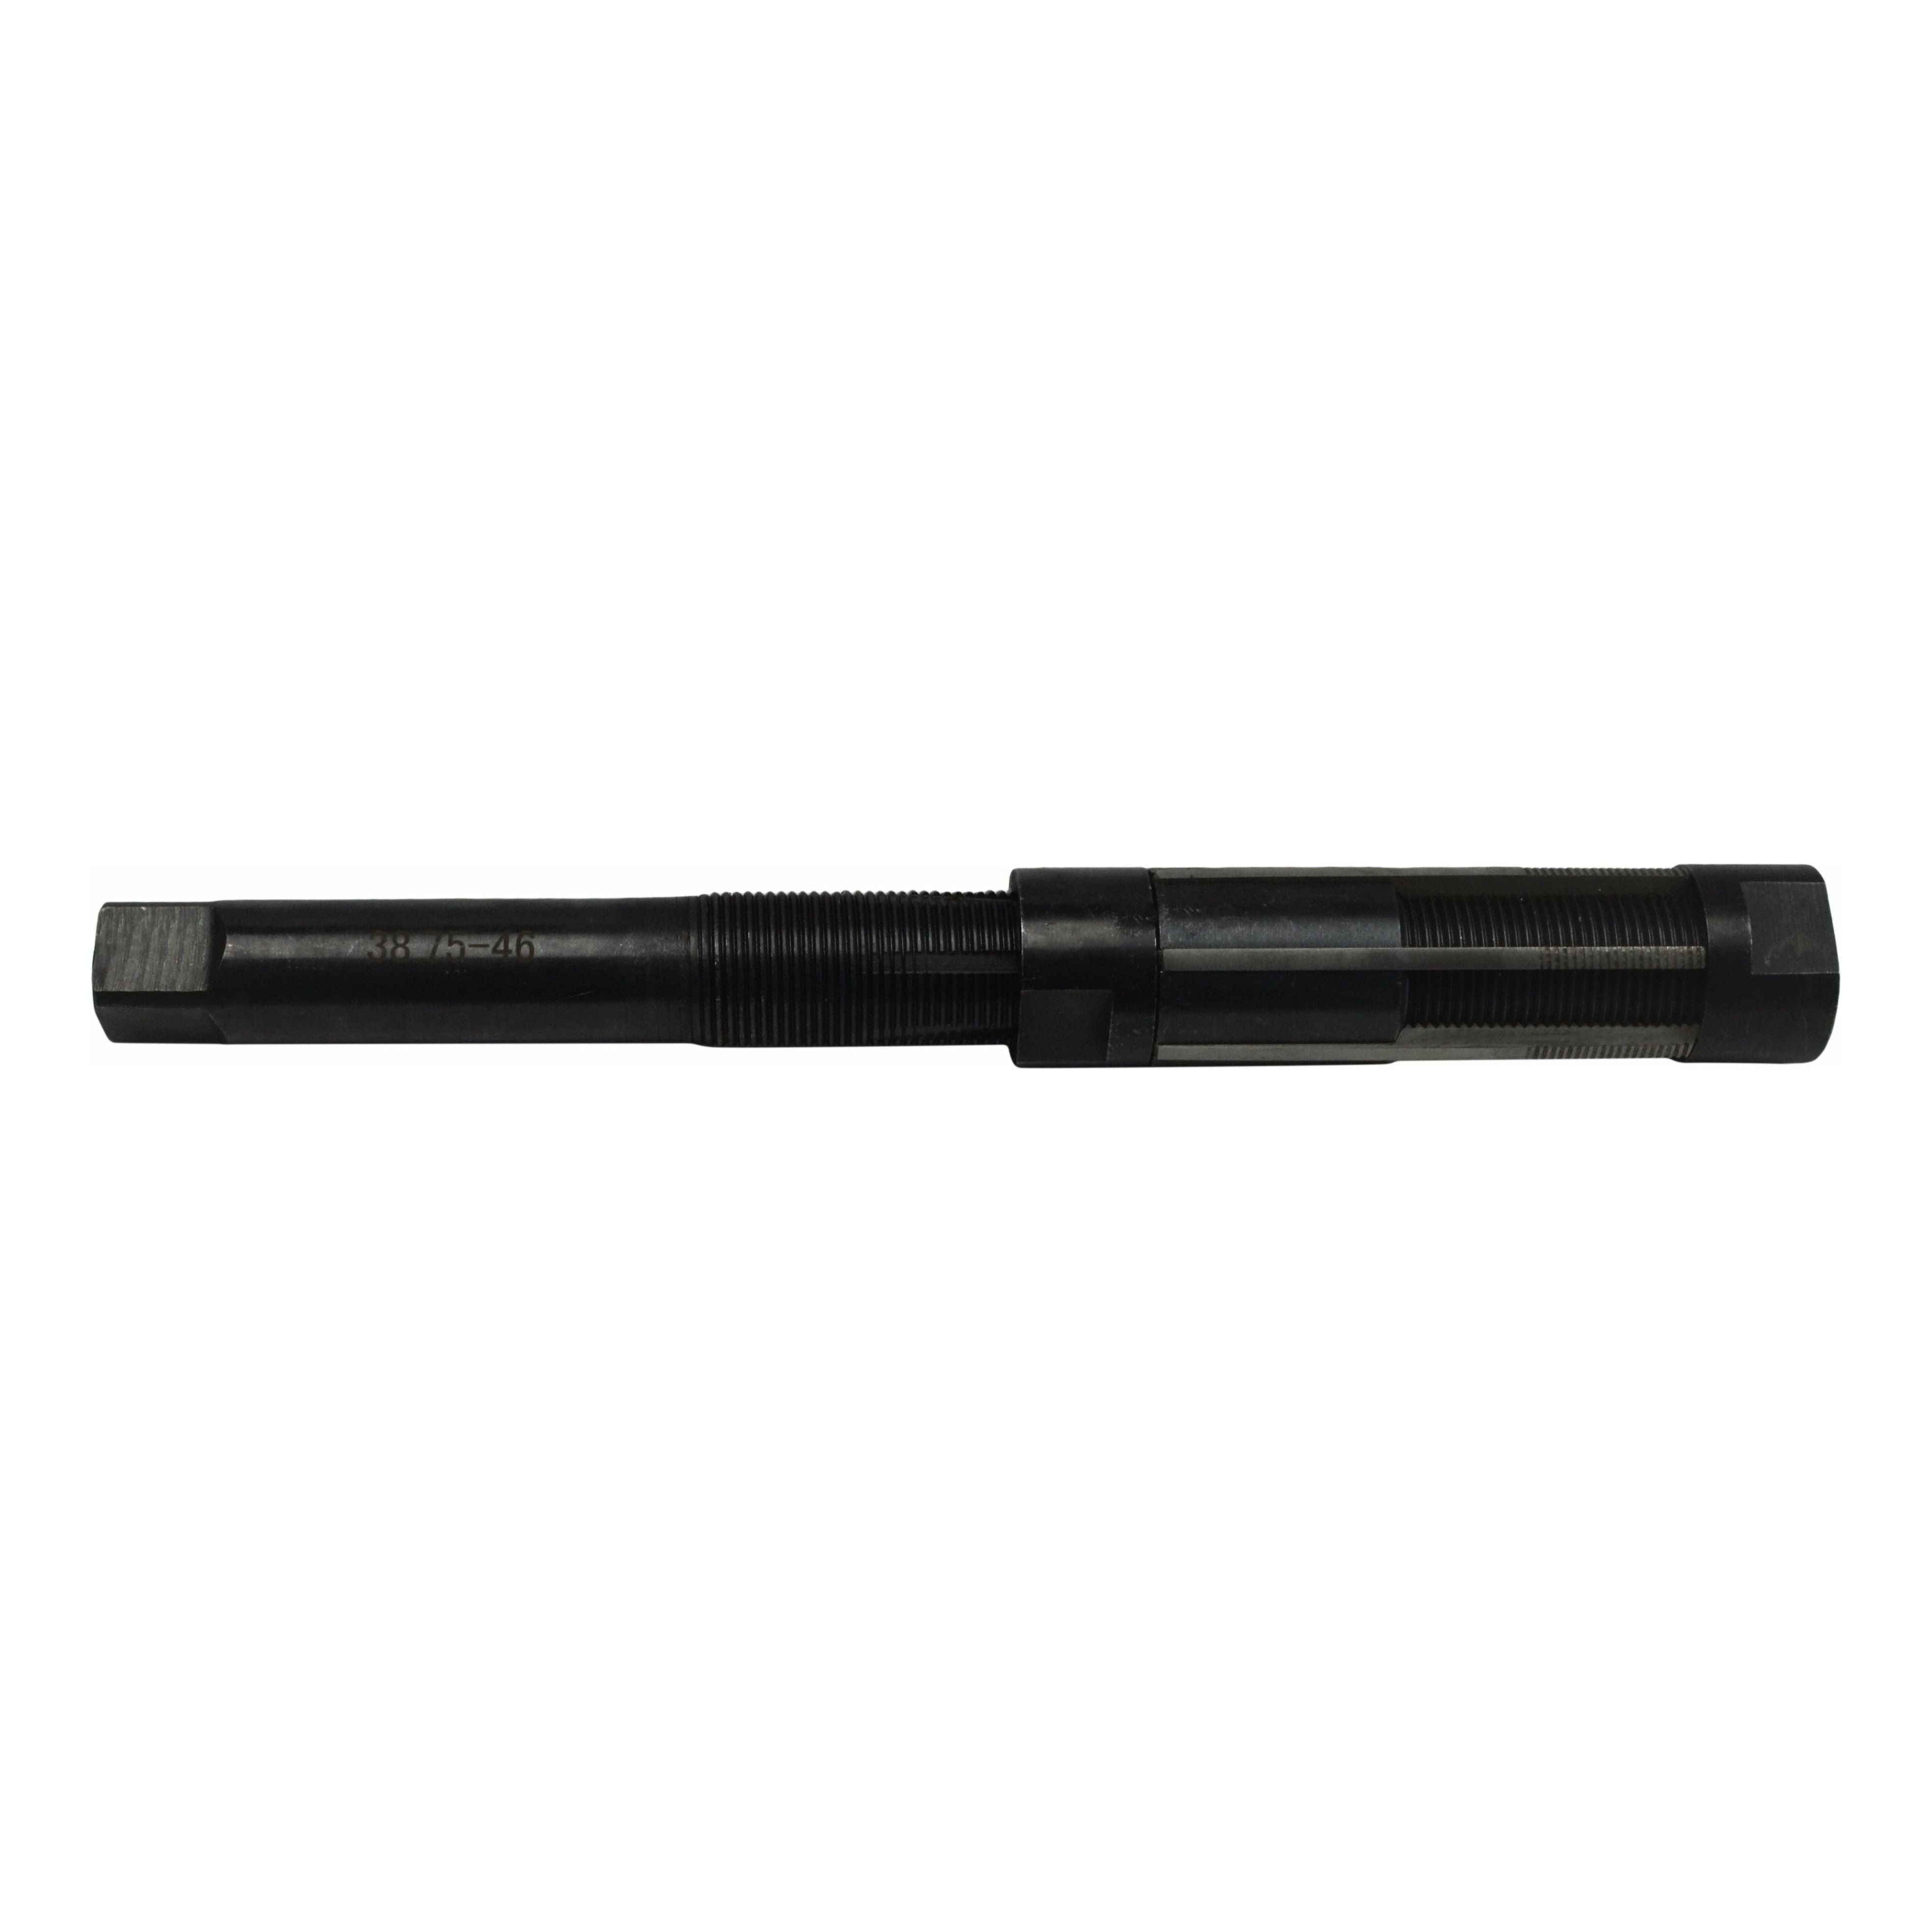 38.75 - 46 mm HSS Blade No Guide Adjustable Hand Reamer